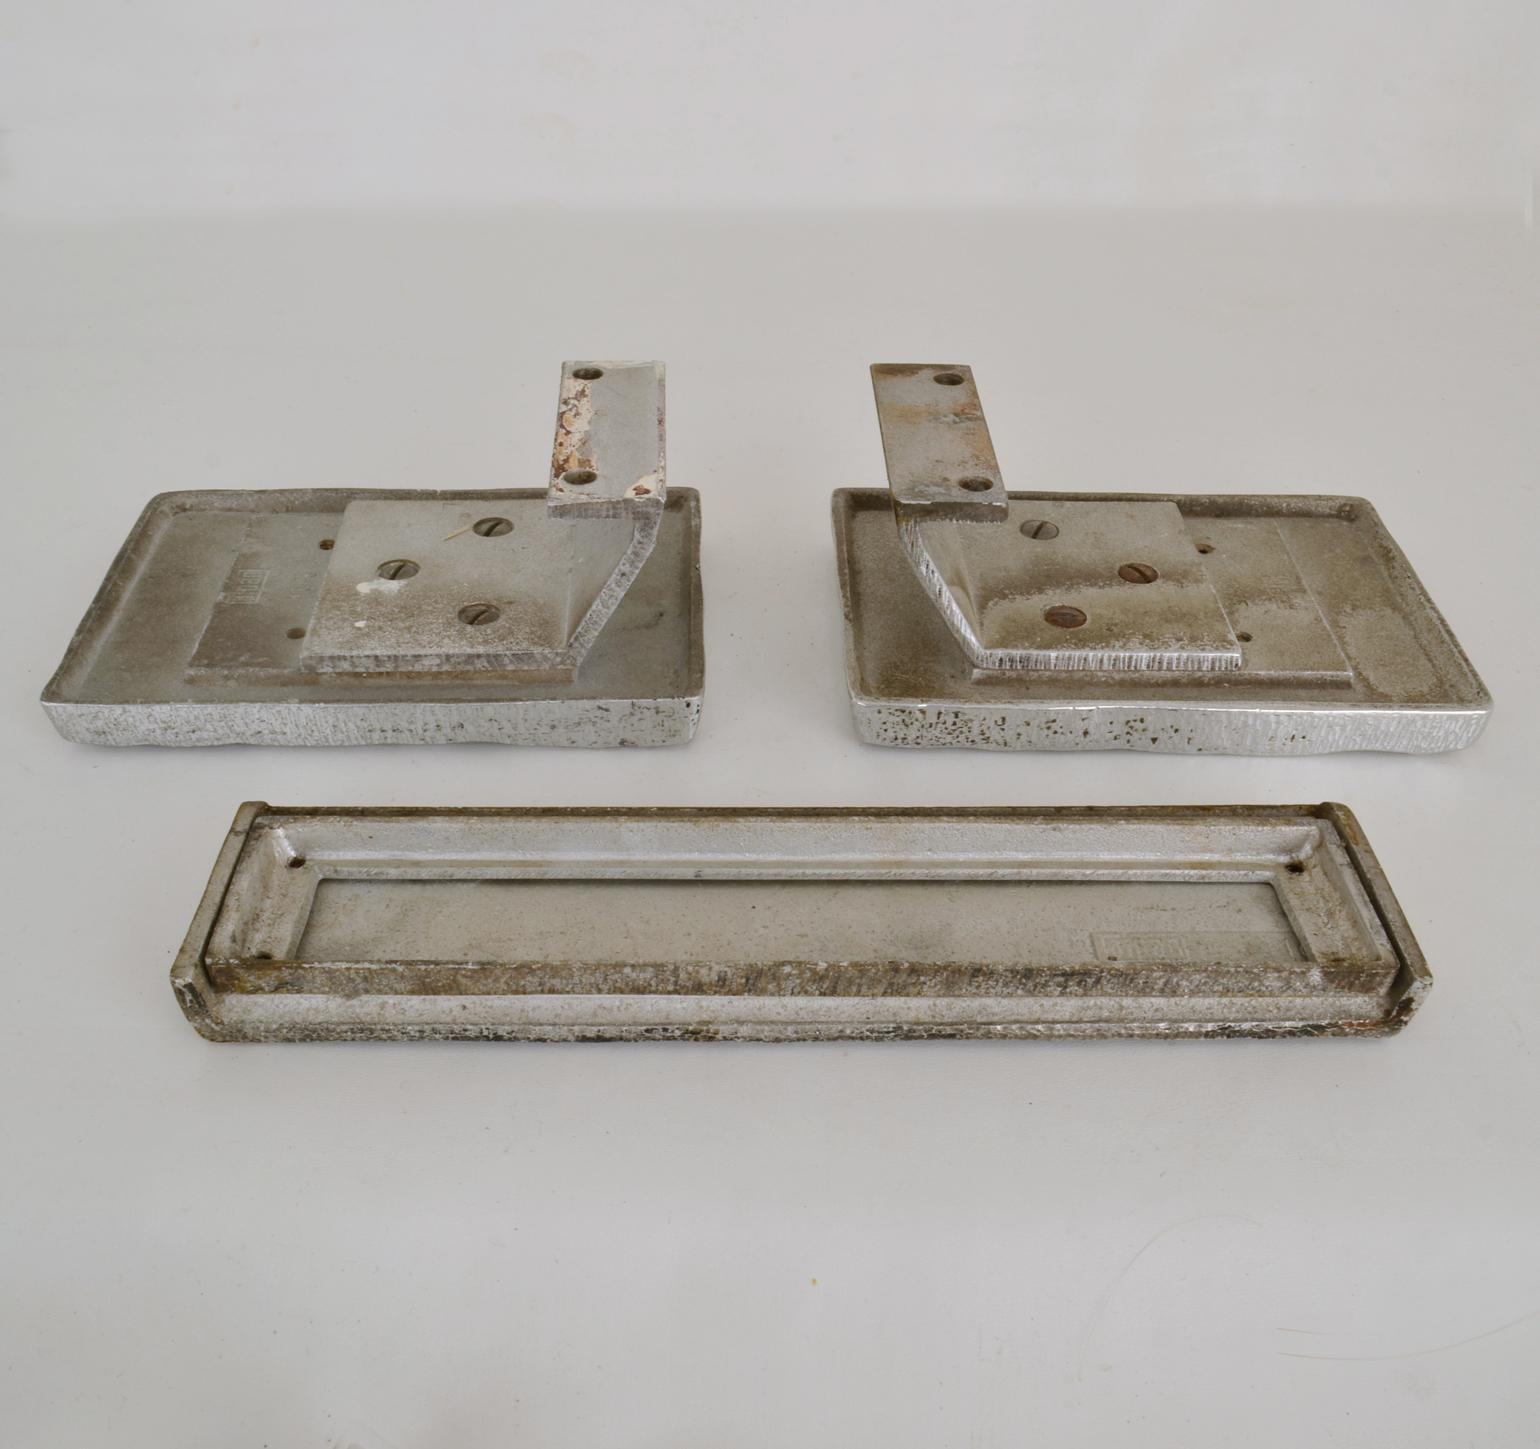 Cast Pair of Brutalist Push and Pull Bronze Door Handles and Letterbox in Aluminum